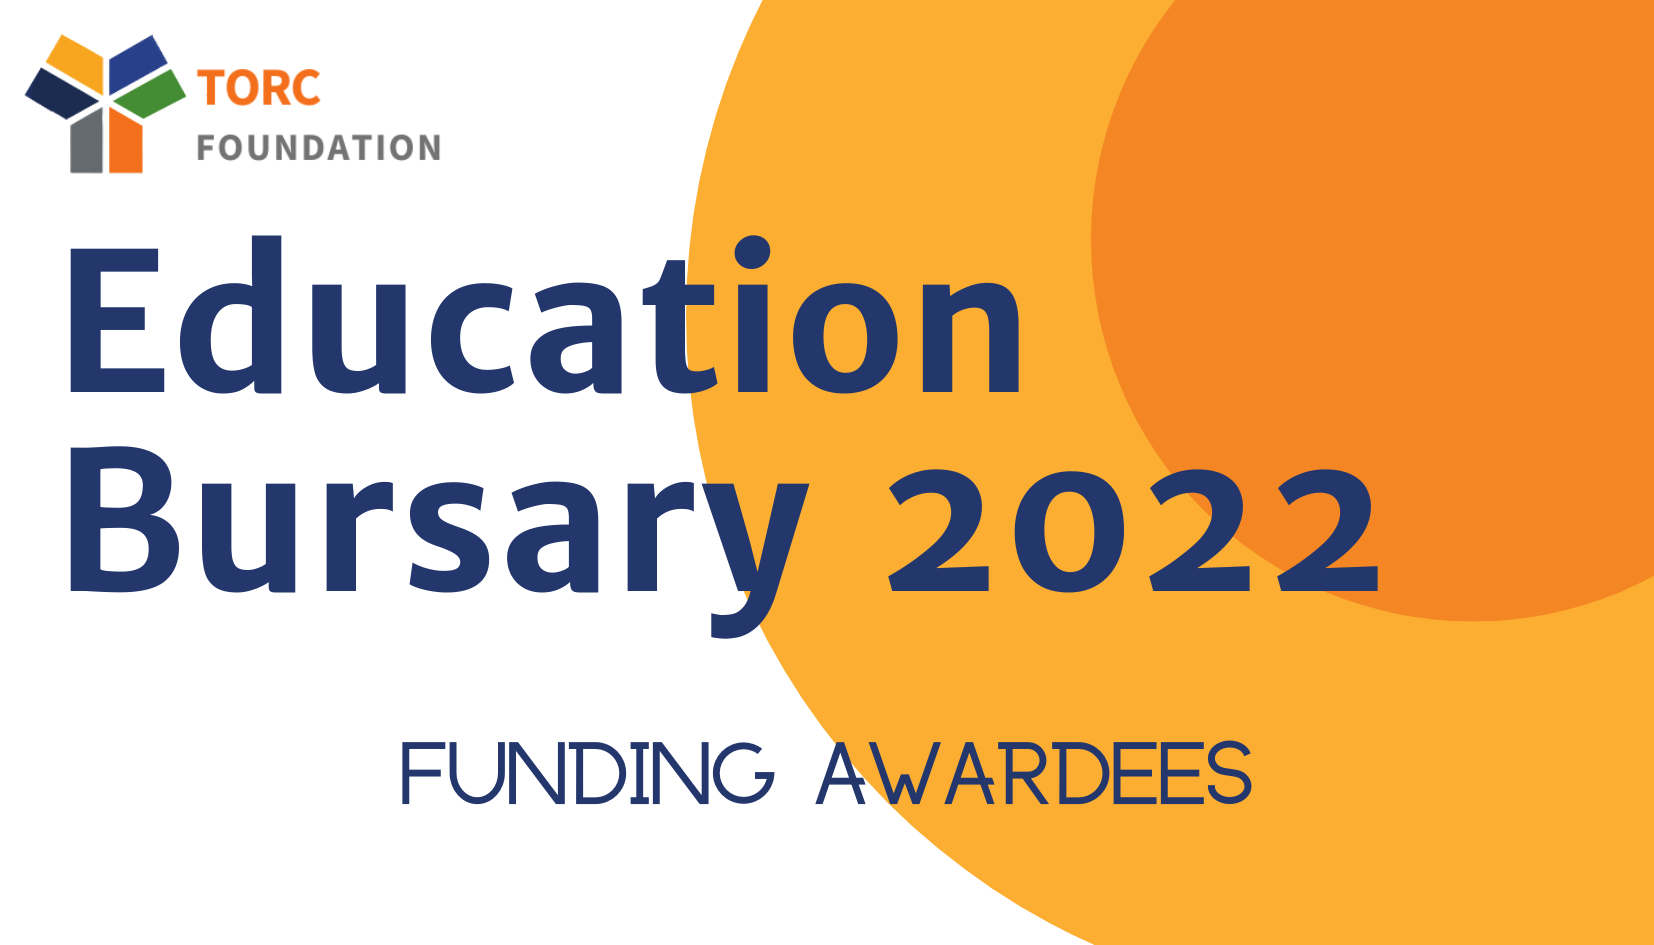 Funding Awards from TORC Foundation Education Bursary Announced